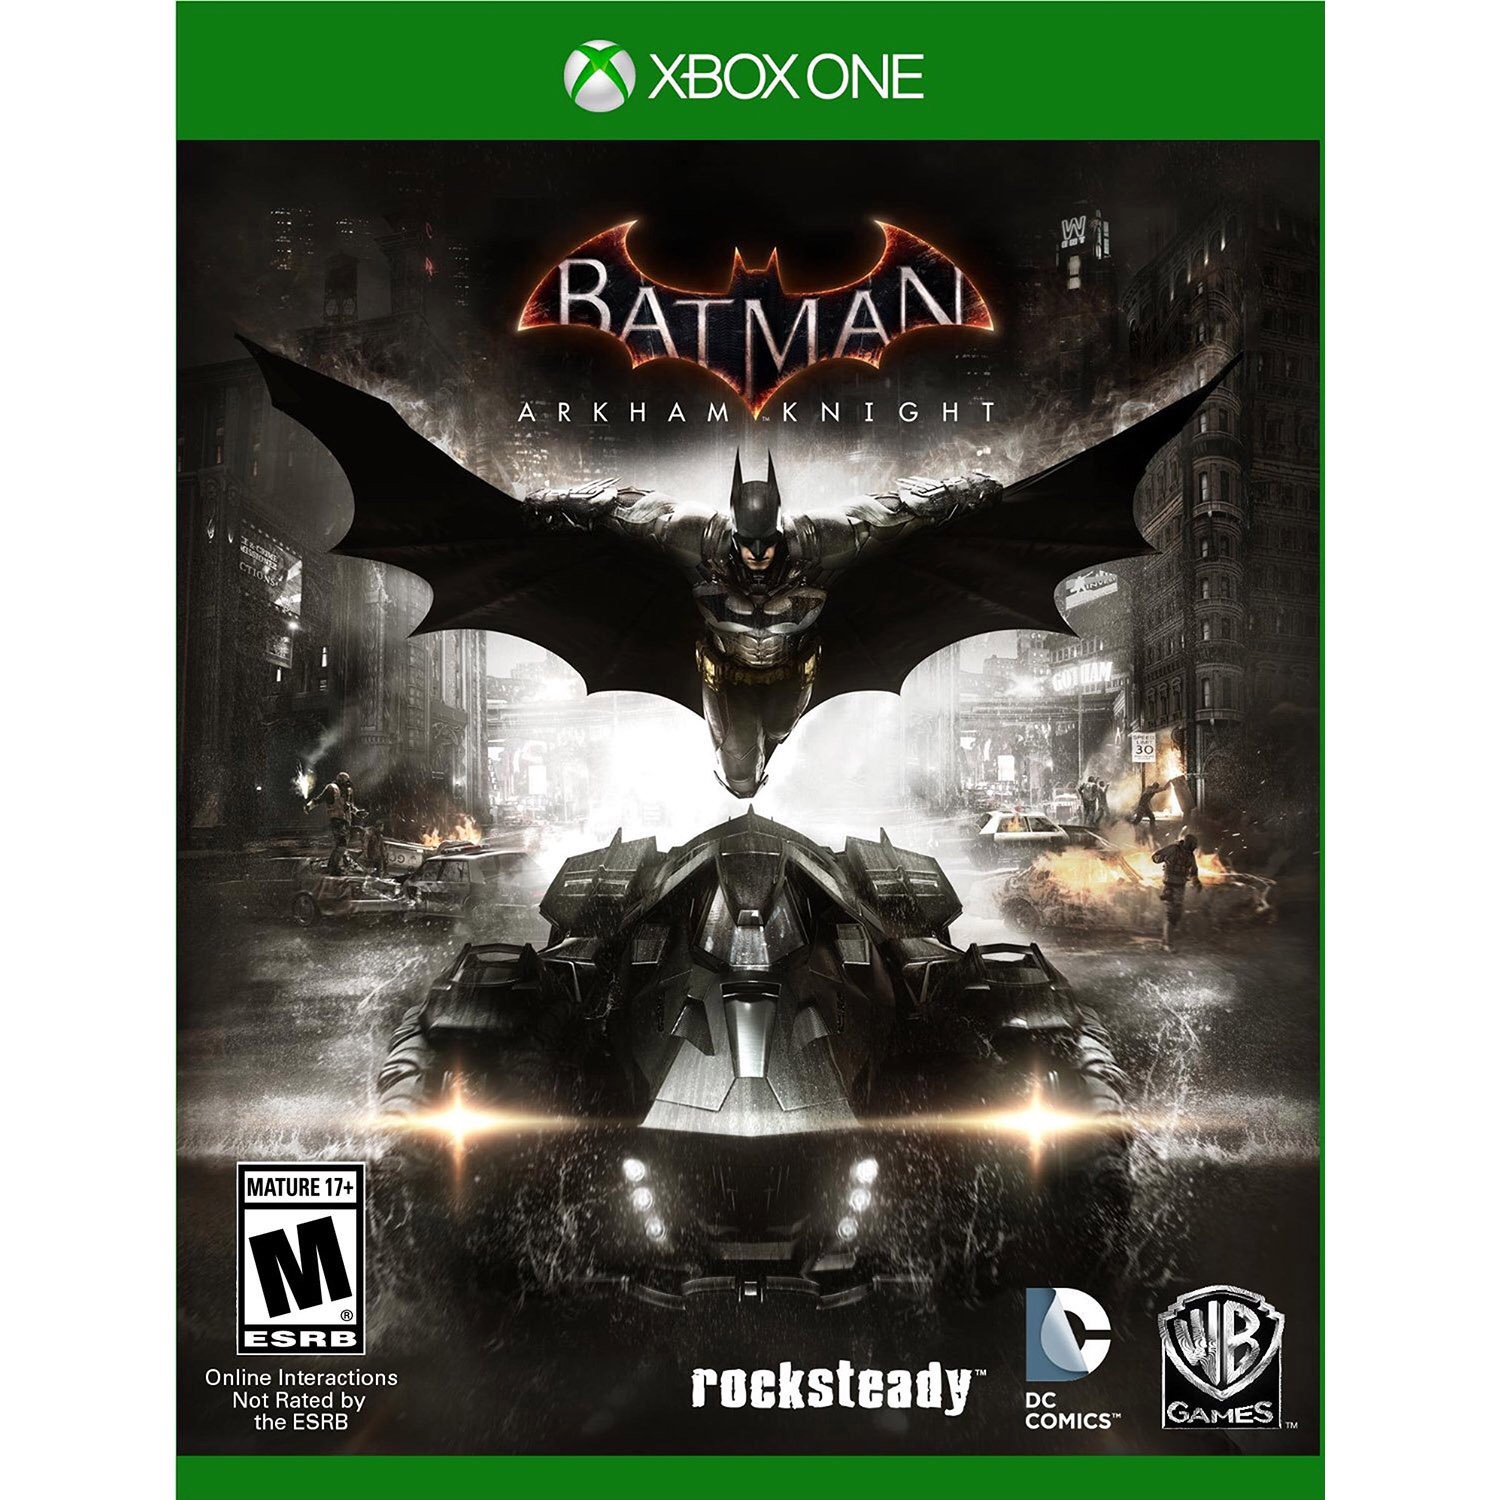 Warner Brothers Batman: Arkham Knight Xbox One, 883929468331 - Walmart.com - Walmart.com
游戏